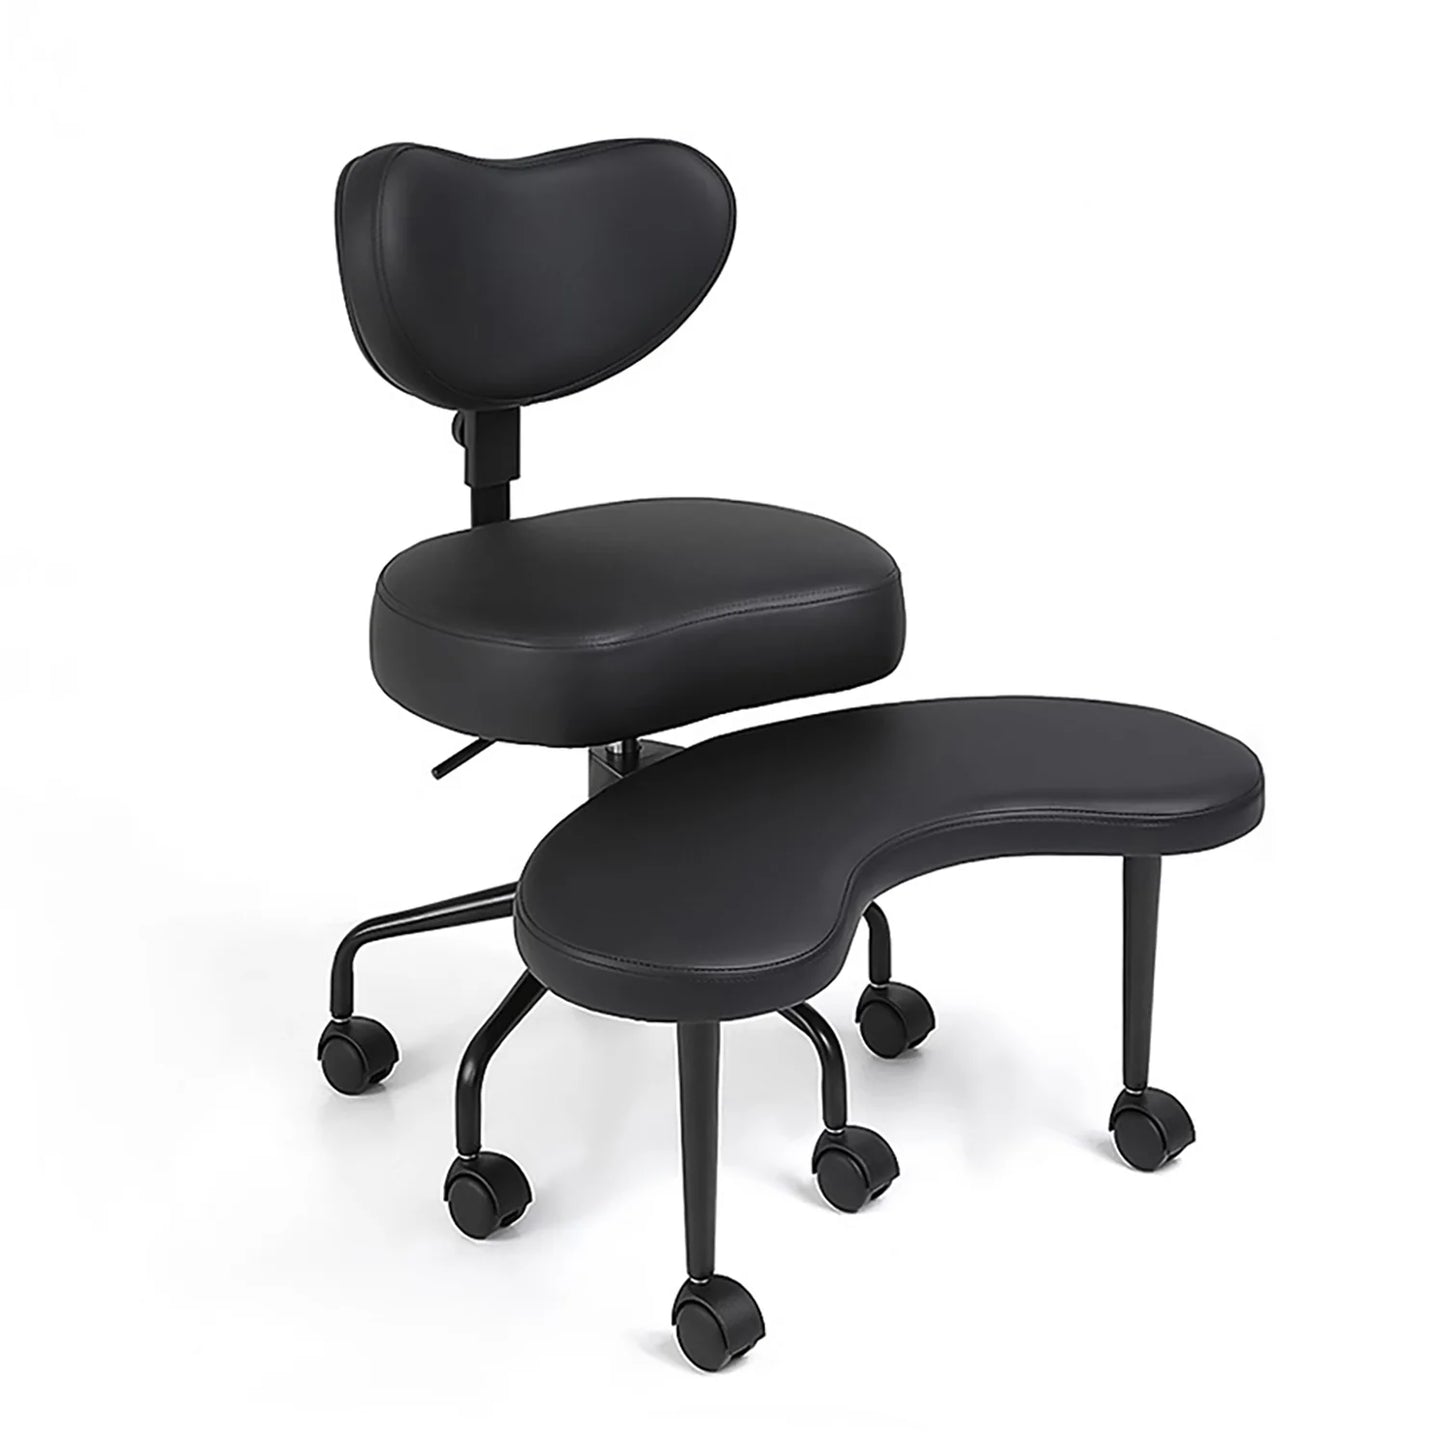 Versatile Ergonomic Chair for Home/Office - 360° Swivel, Comfort Support, Durable Design